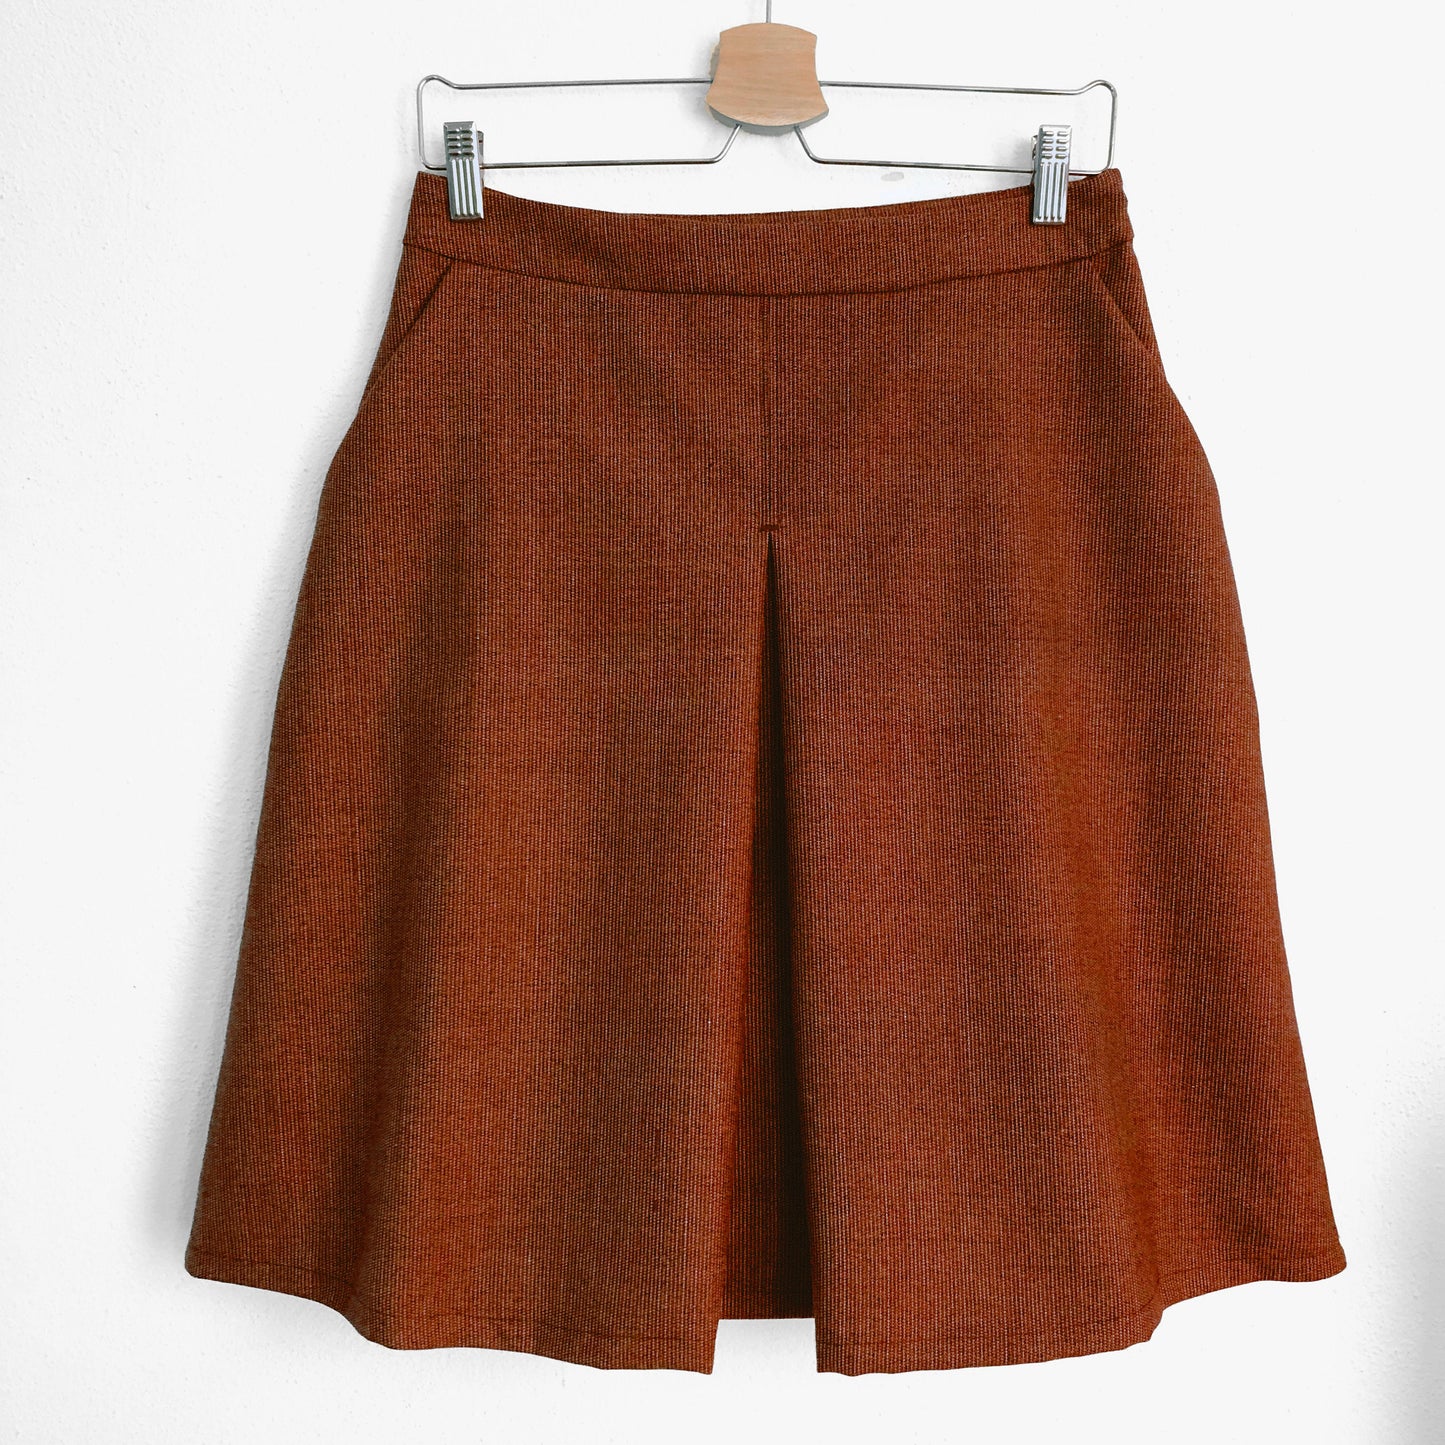 EMILY skirt - sewing pattern